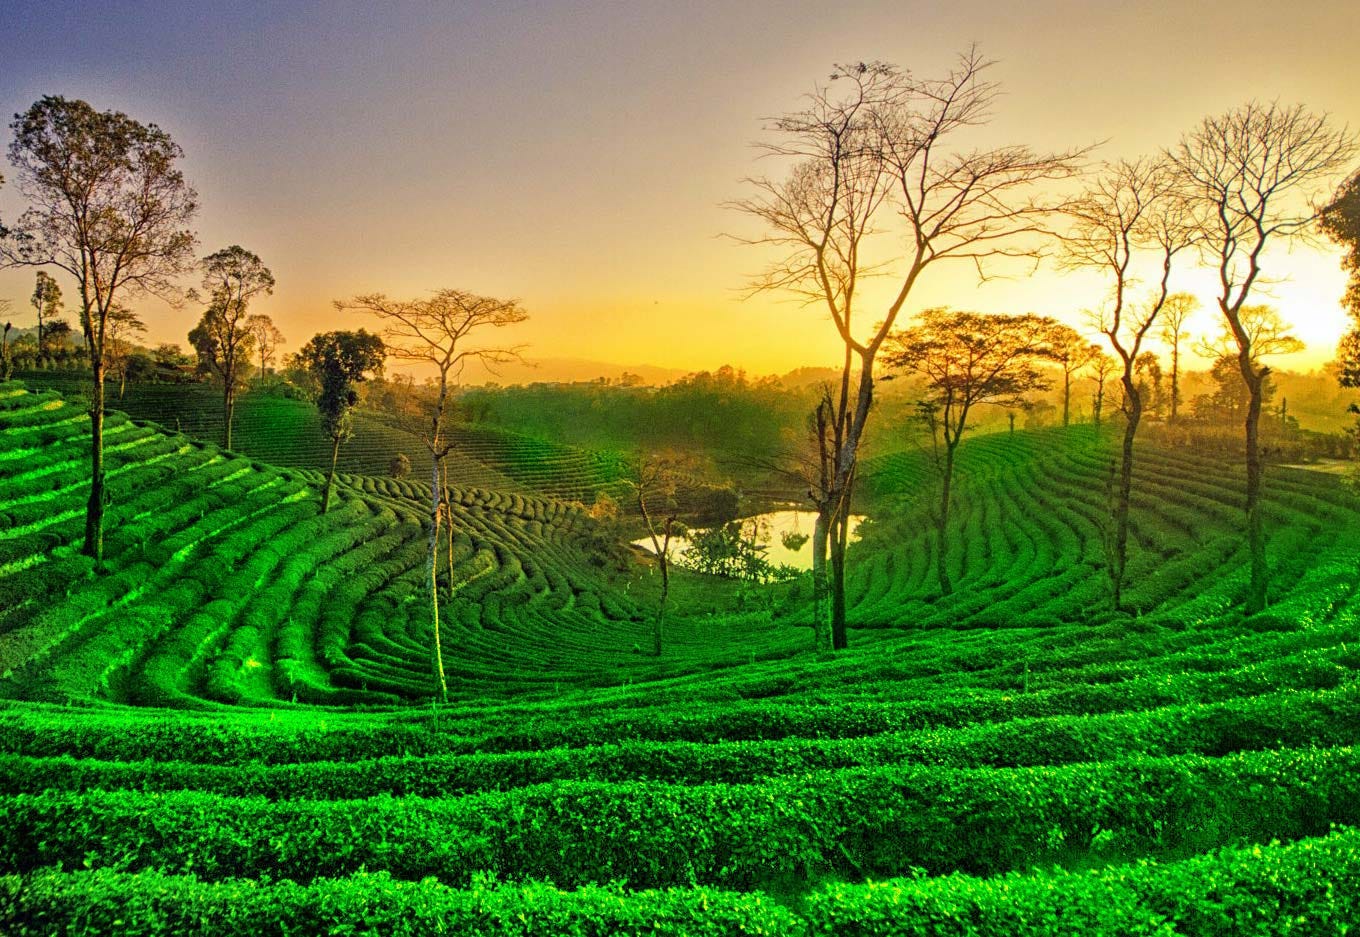 Tea Gardens of Assam creates Beautiful Scenes | by Subhisharma | Medium